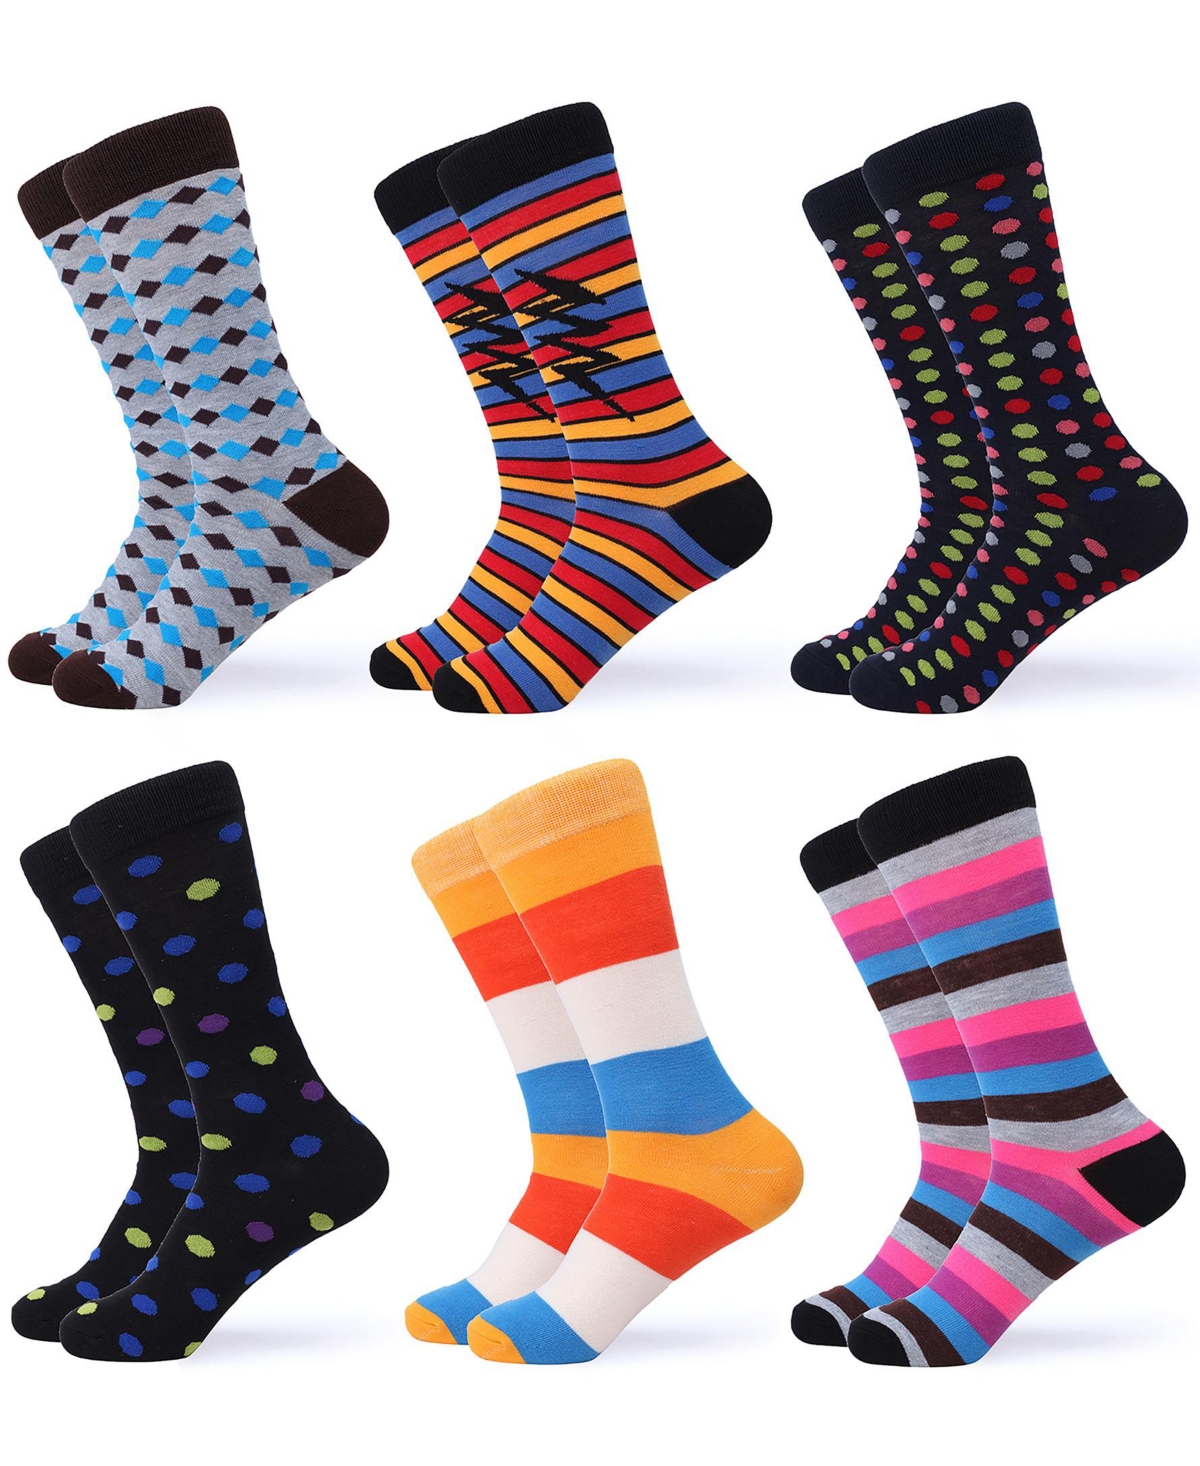 Men's Classy Colorful Dress Socks 6 Pack - Classy colors